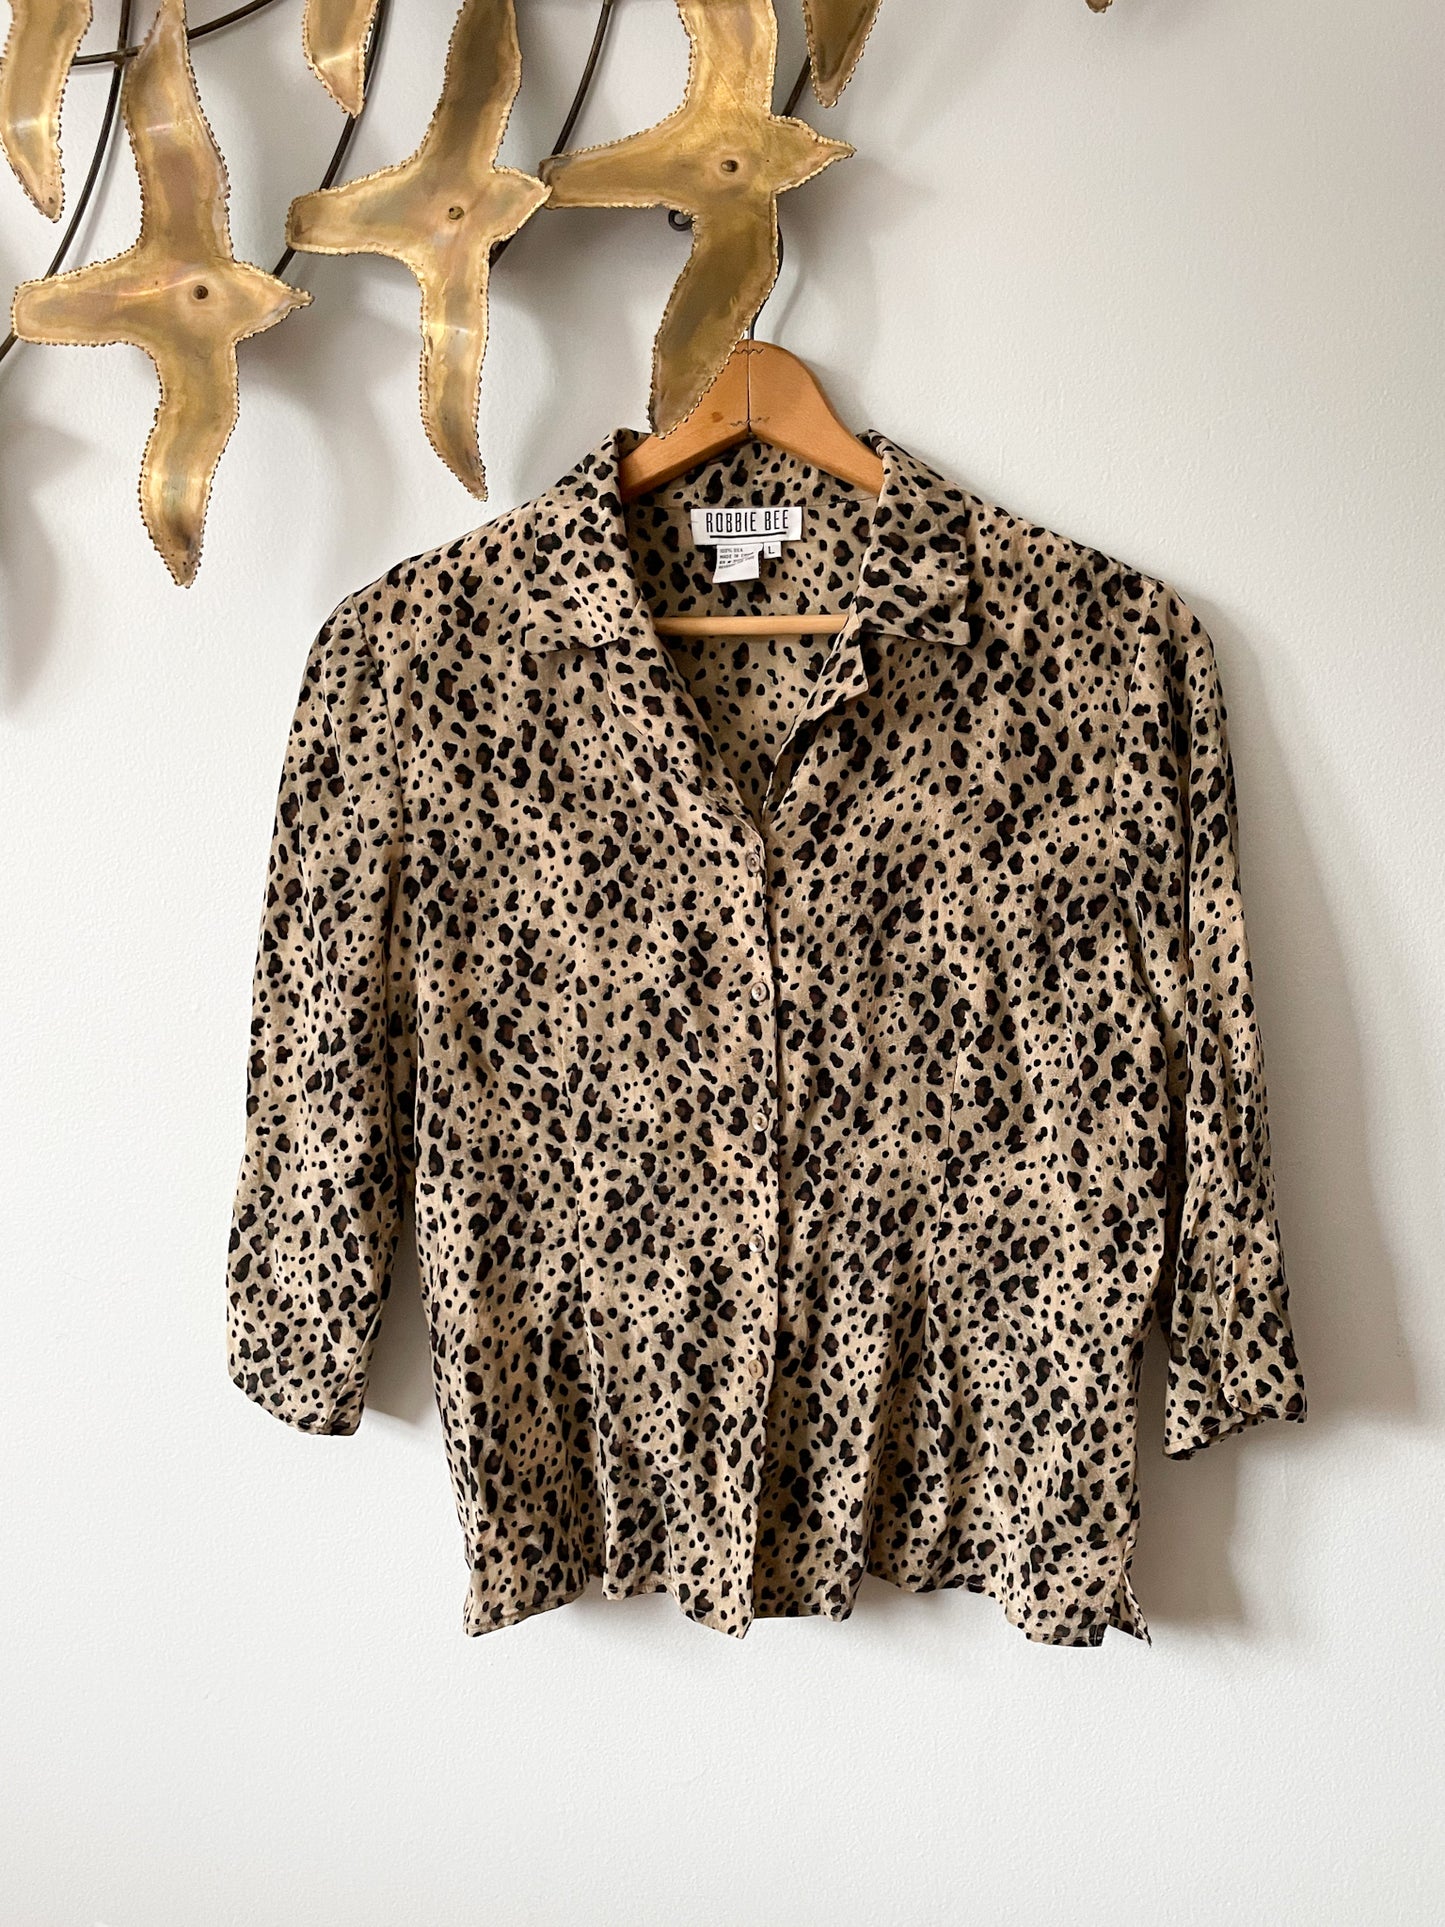 Vintage Robbie Bee Leopard Print 3/4 Sleeve 100% Silk Button Down Top - Large